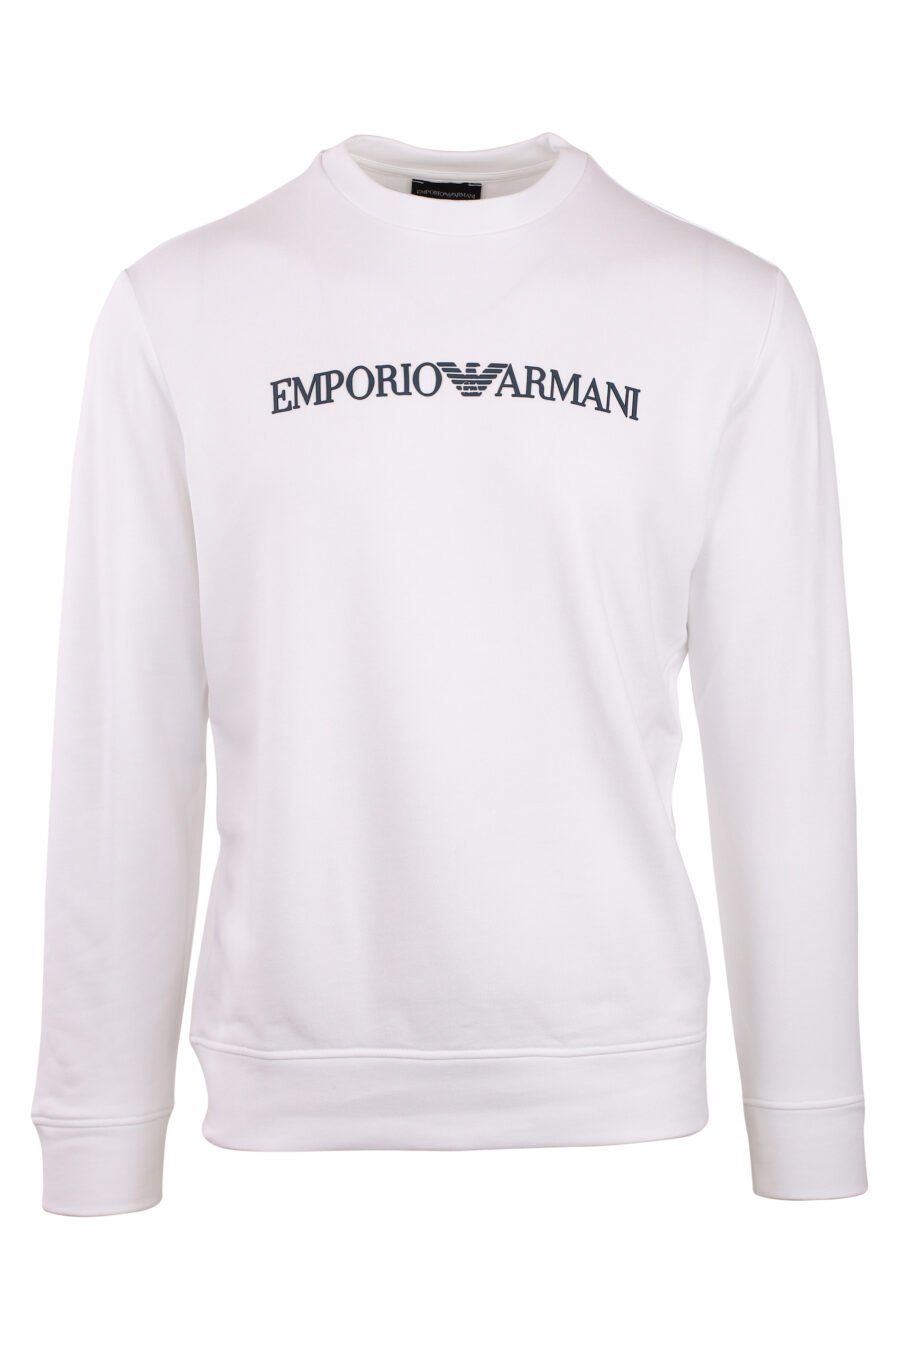 White sweatshirt with black lettering - IMG 0817